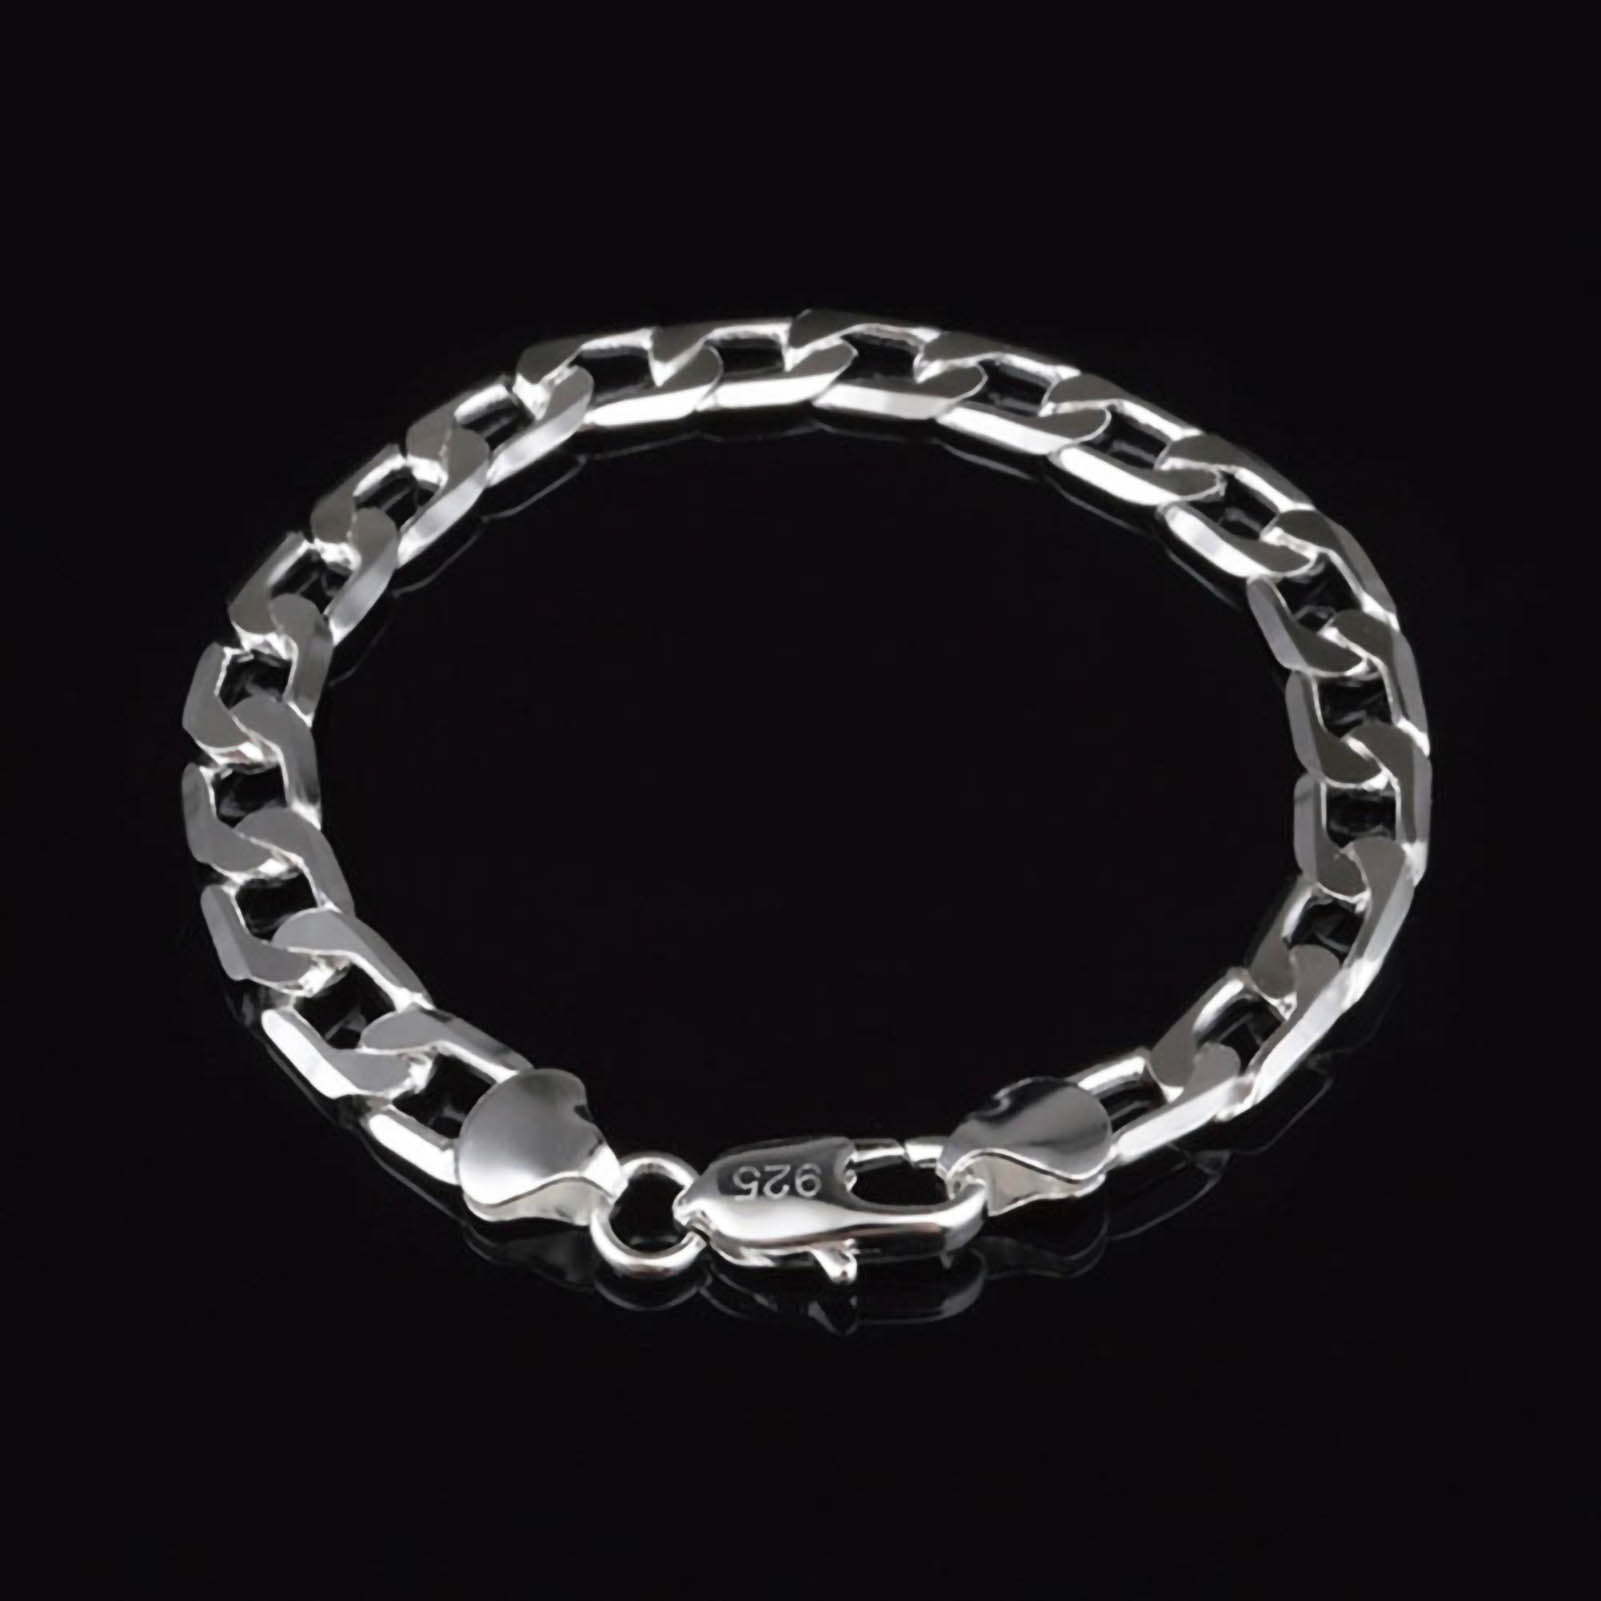 Buy Sumoki Stainless Steel Sachin Chain & Chain Style Bracelet wedding,  party, festival wear chain & bracelet For Boy/Men at Amazon.in